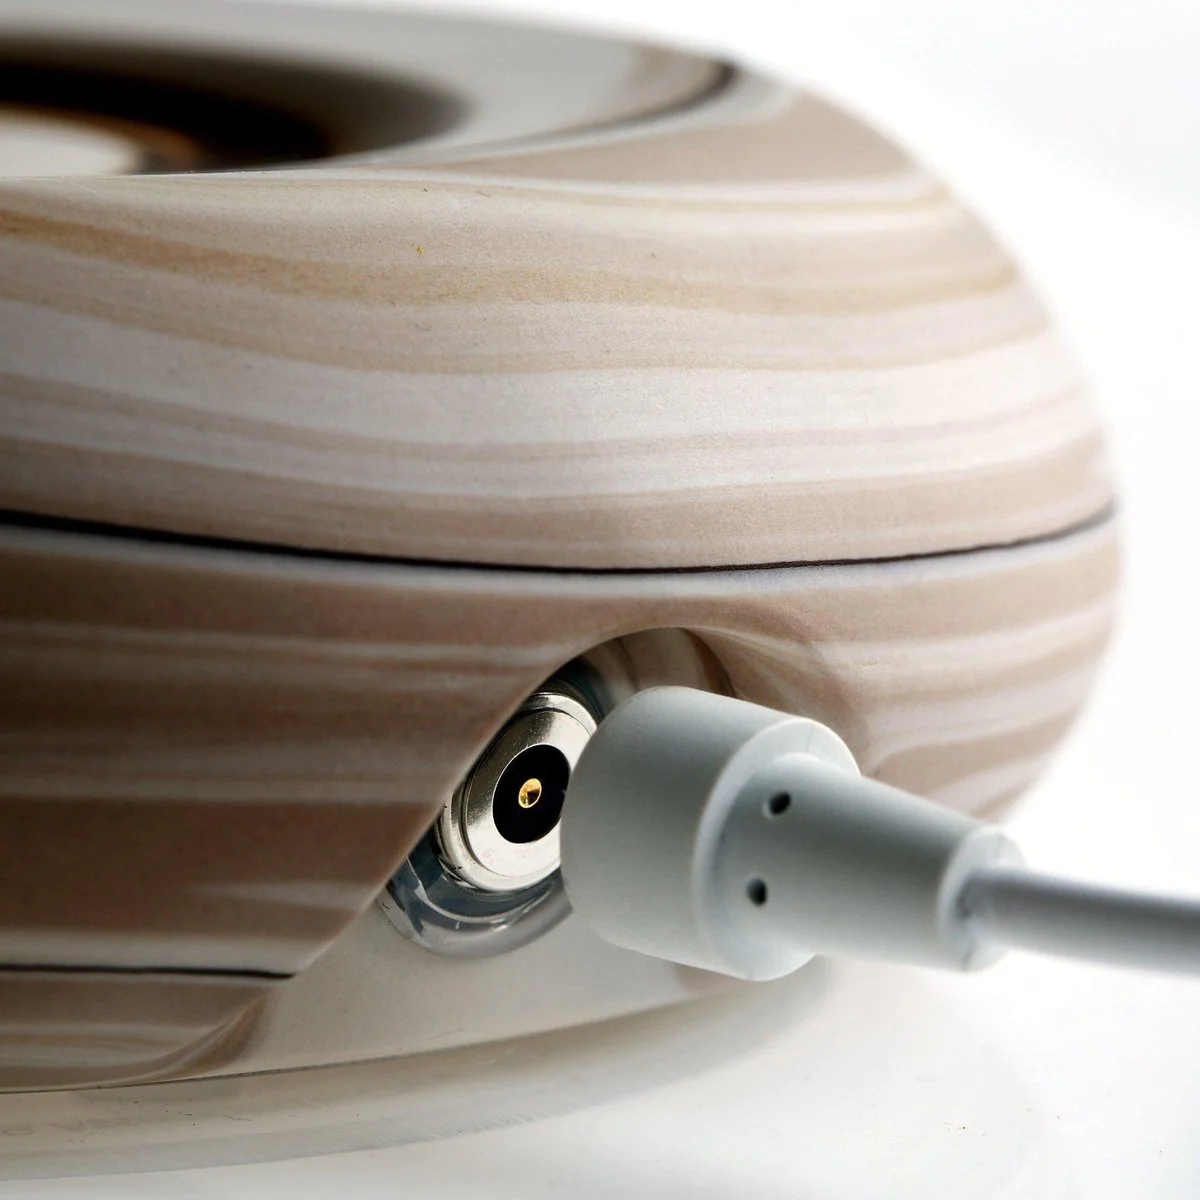 A white plug entering a Mayu Swirl Earth socket